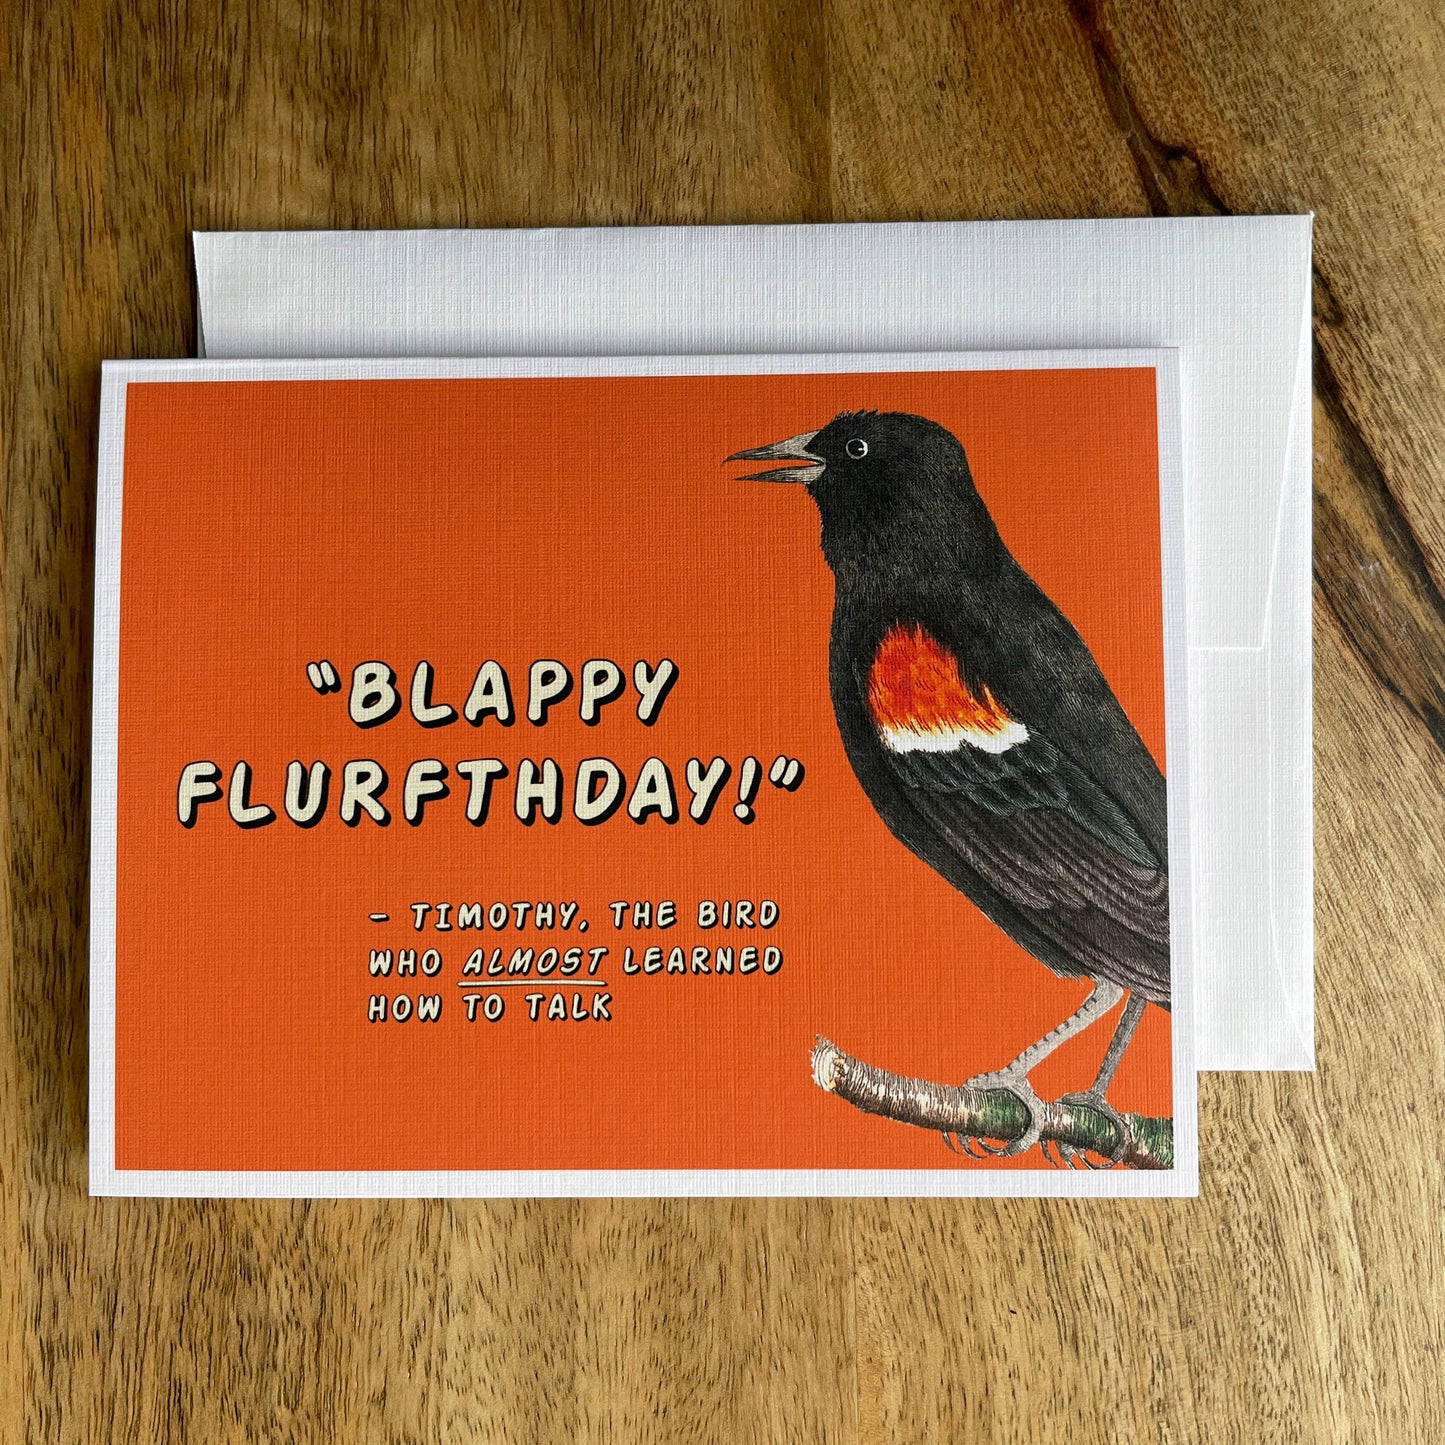 Blappy Flurfthday! funny quirky birthday card